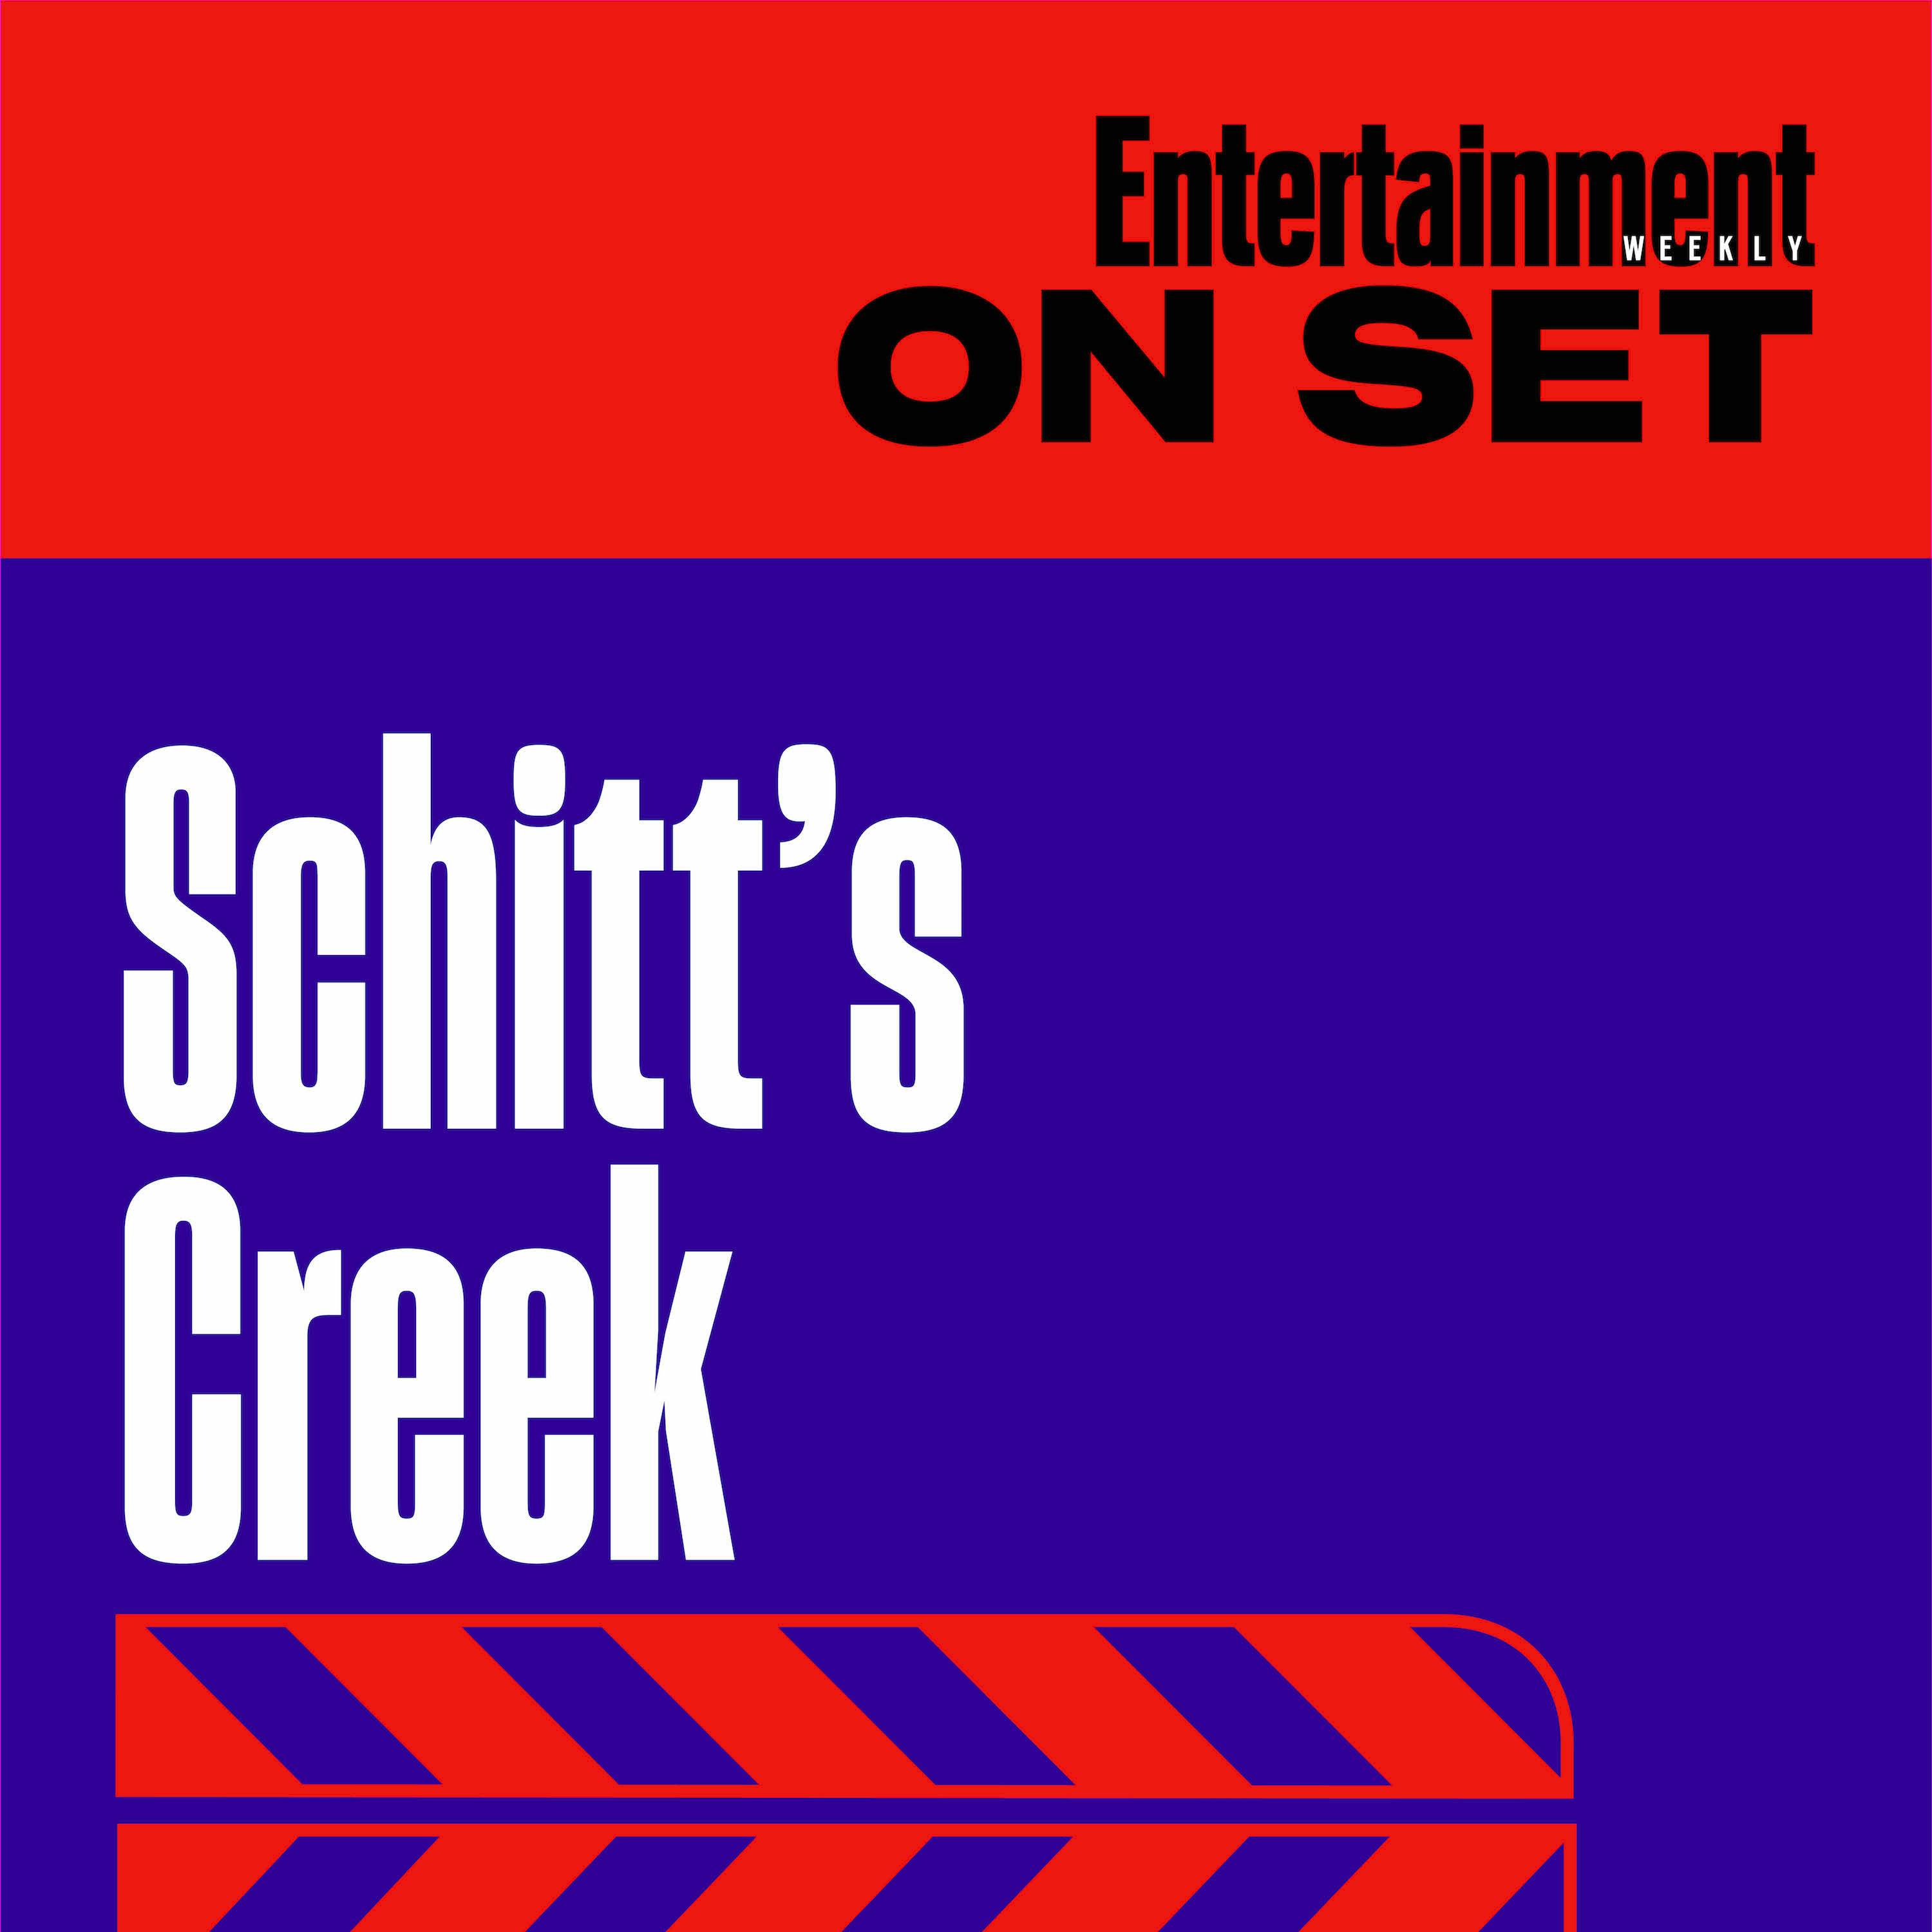 EW On Set: Schitt's Creek Episode 6.14 "Happy Ending"